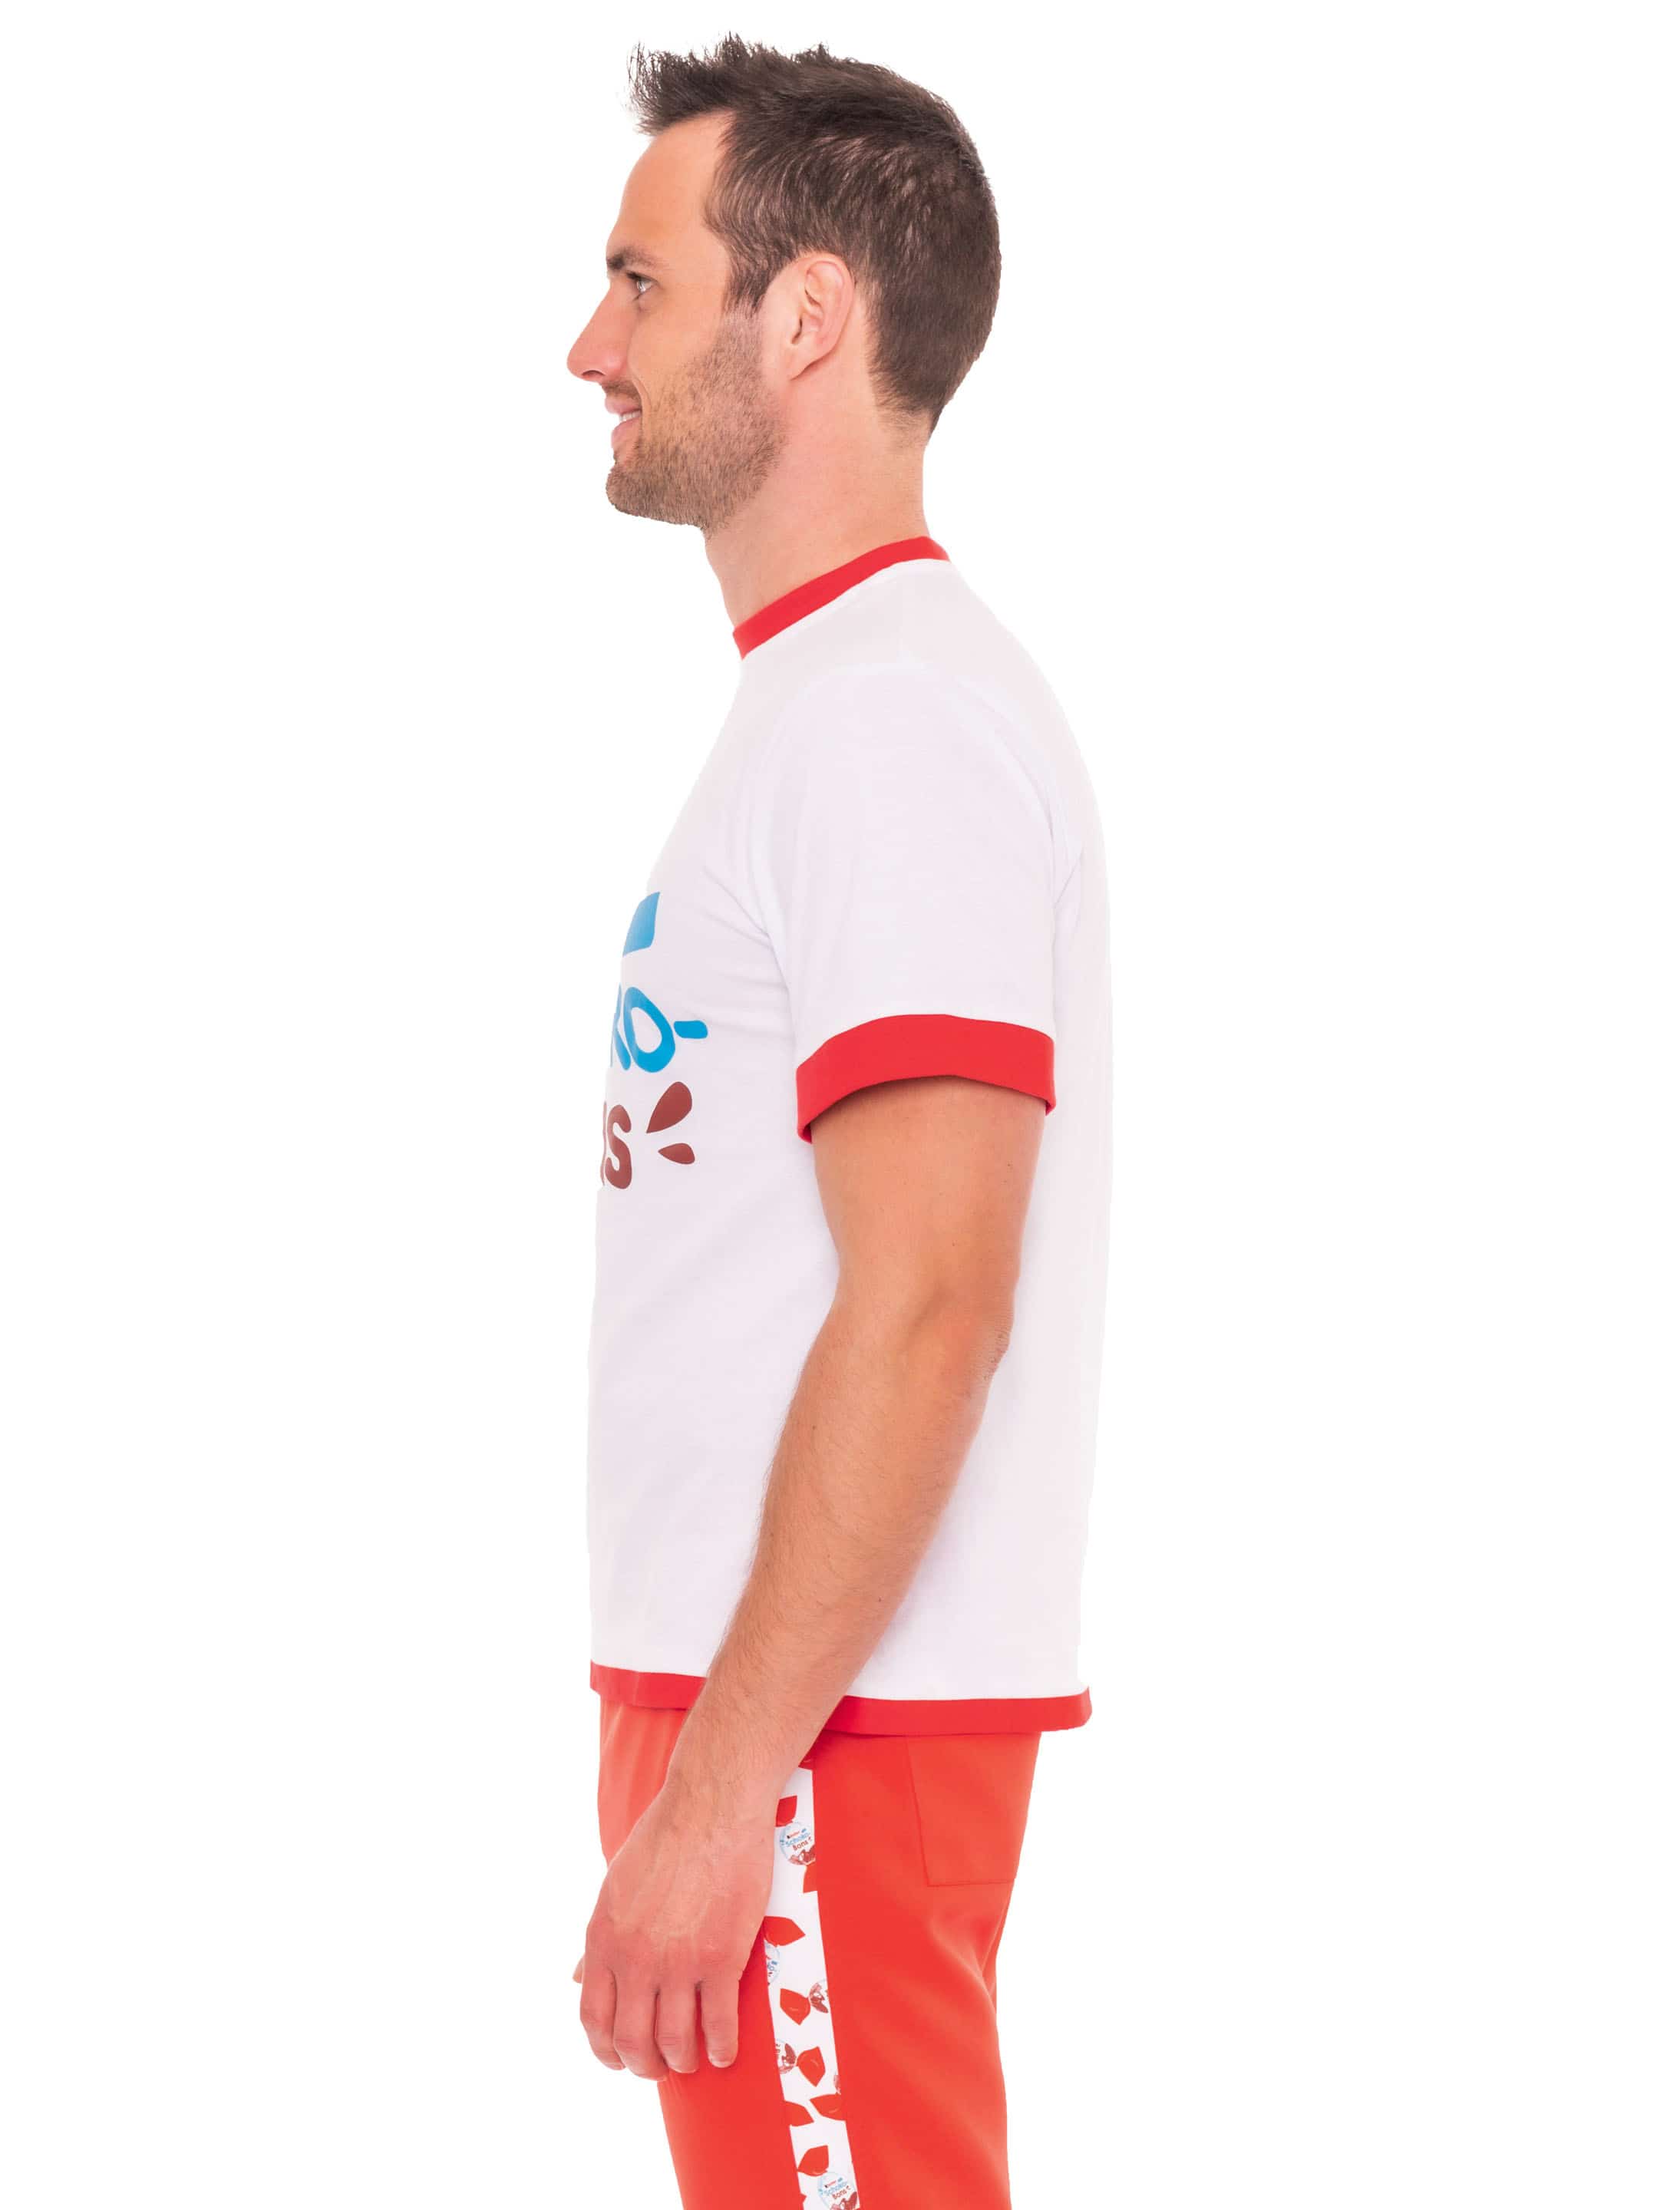 T-Shirt kinder Schoko-Bons Herren rot/weiß XL